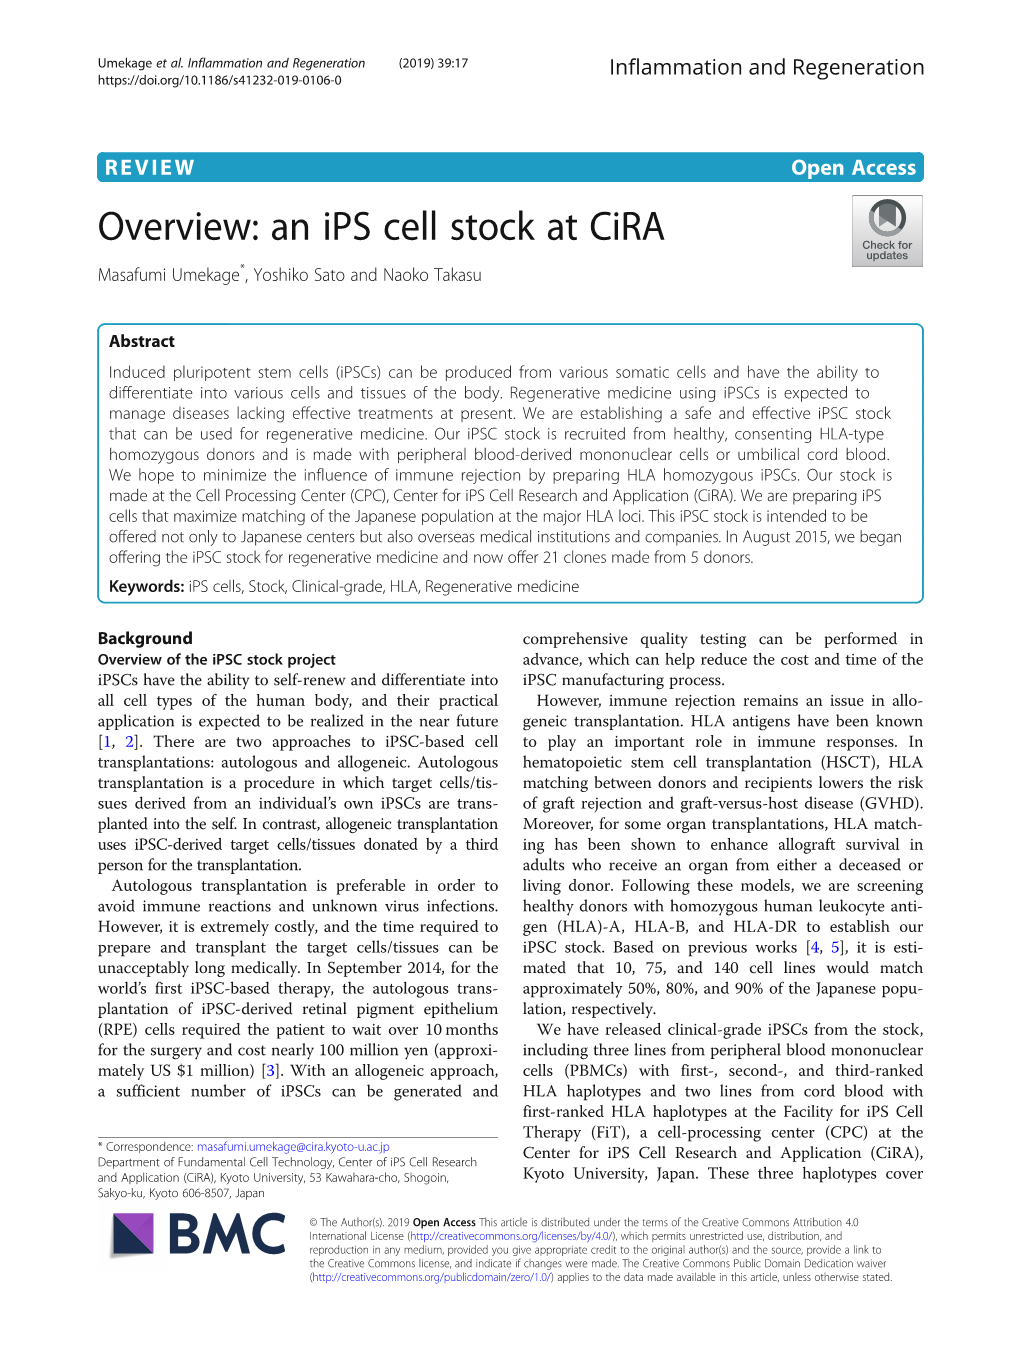 Overview: an Ips Cell Stock at Cira Masafumi Umekage*, Yoshiko Sato and Naoko Takasu